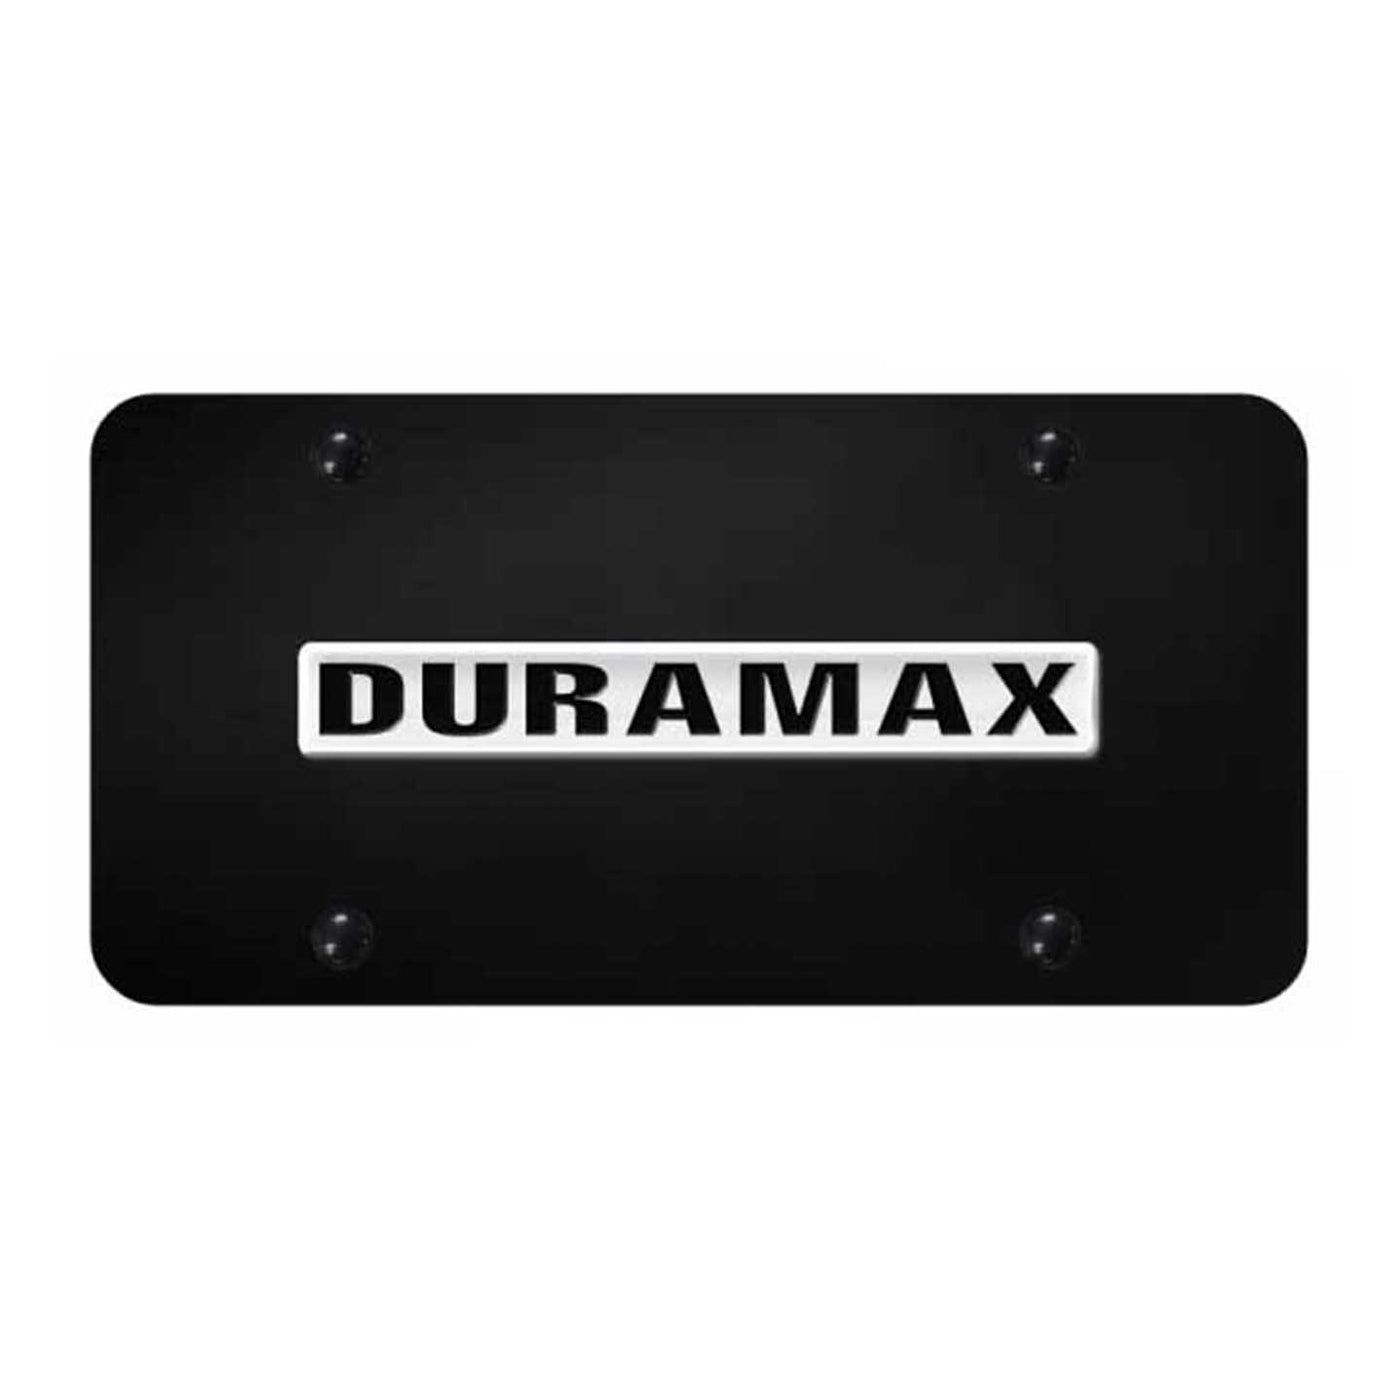 Duramax Name License Plate - Chrome on Black